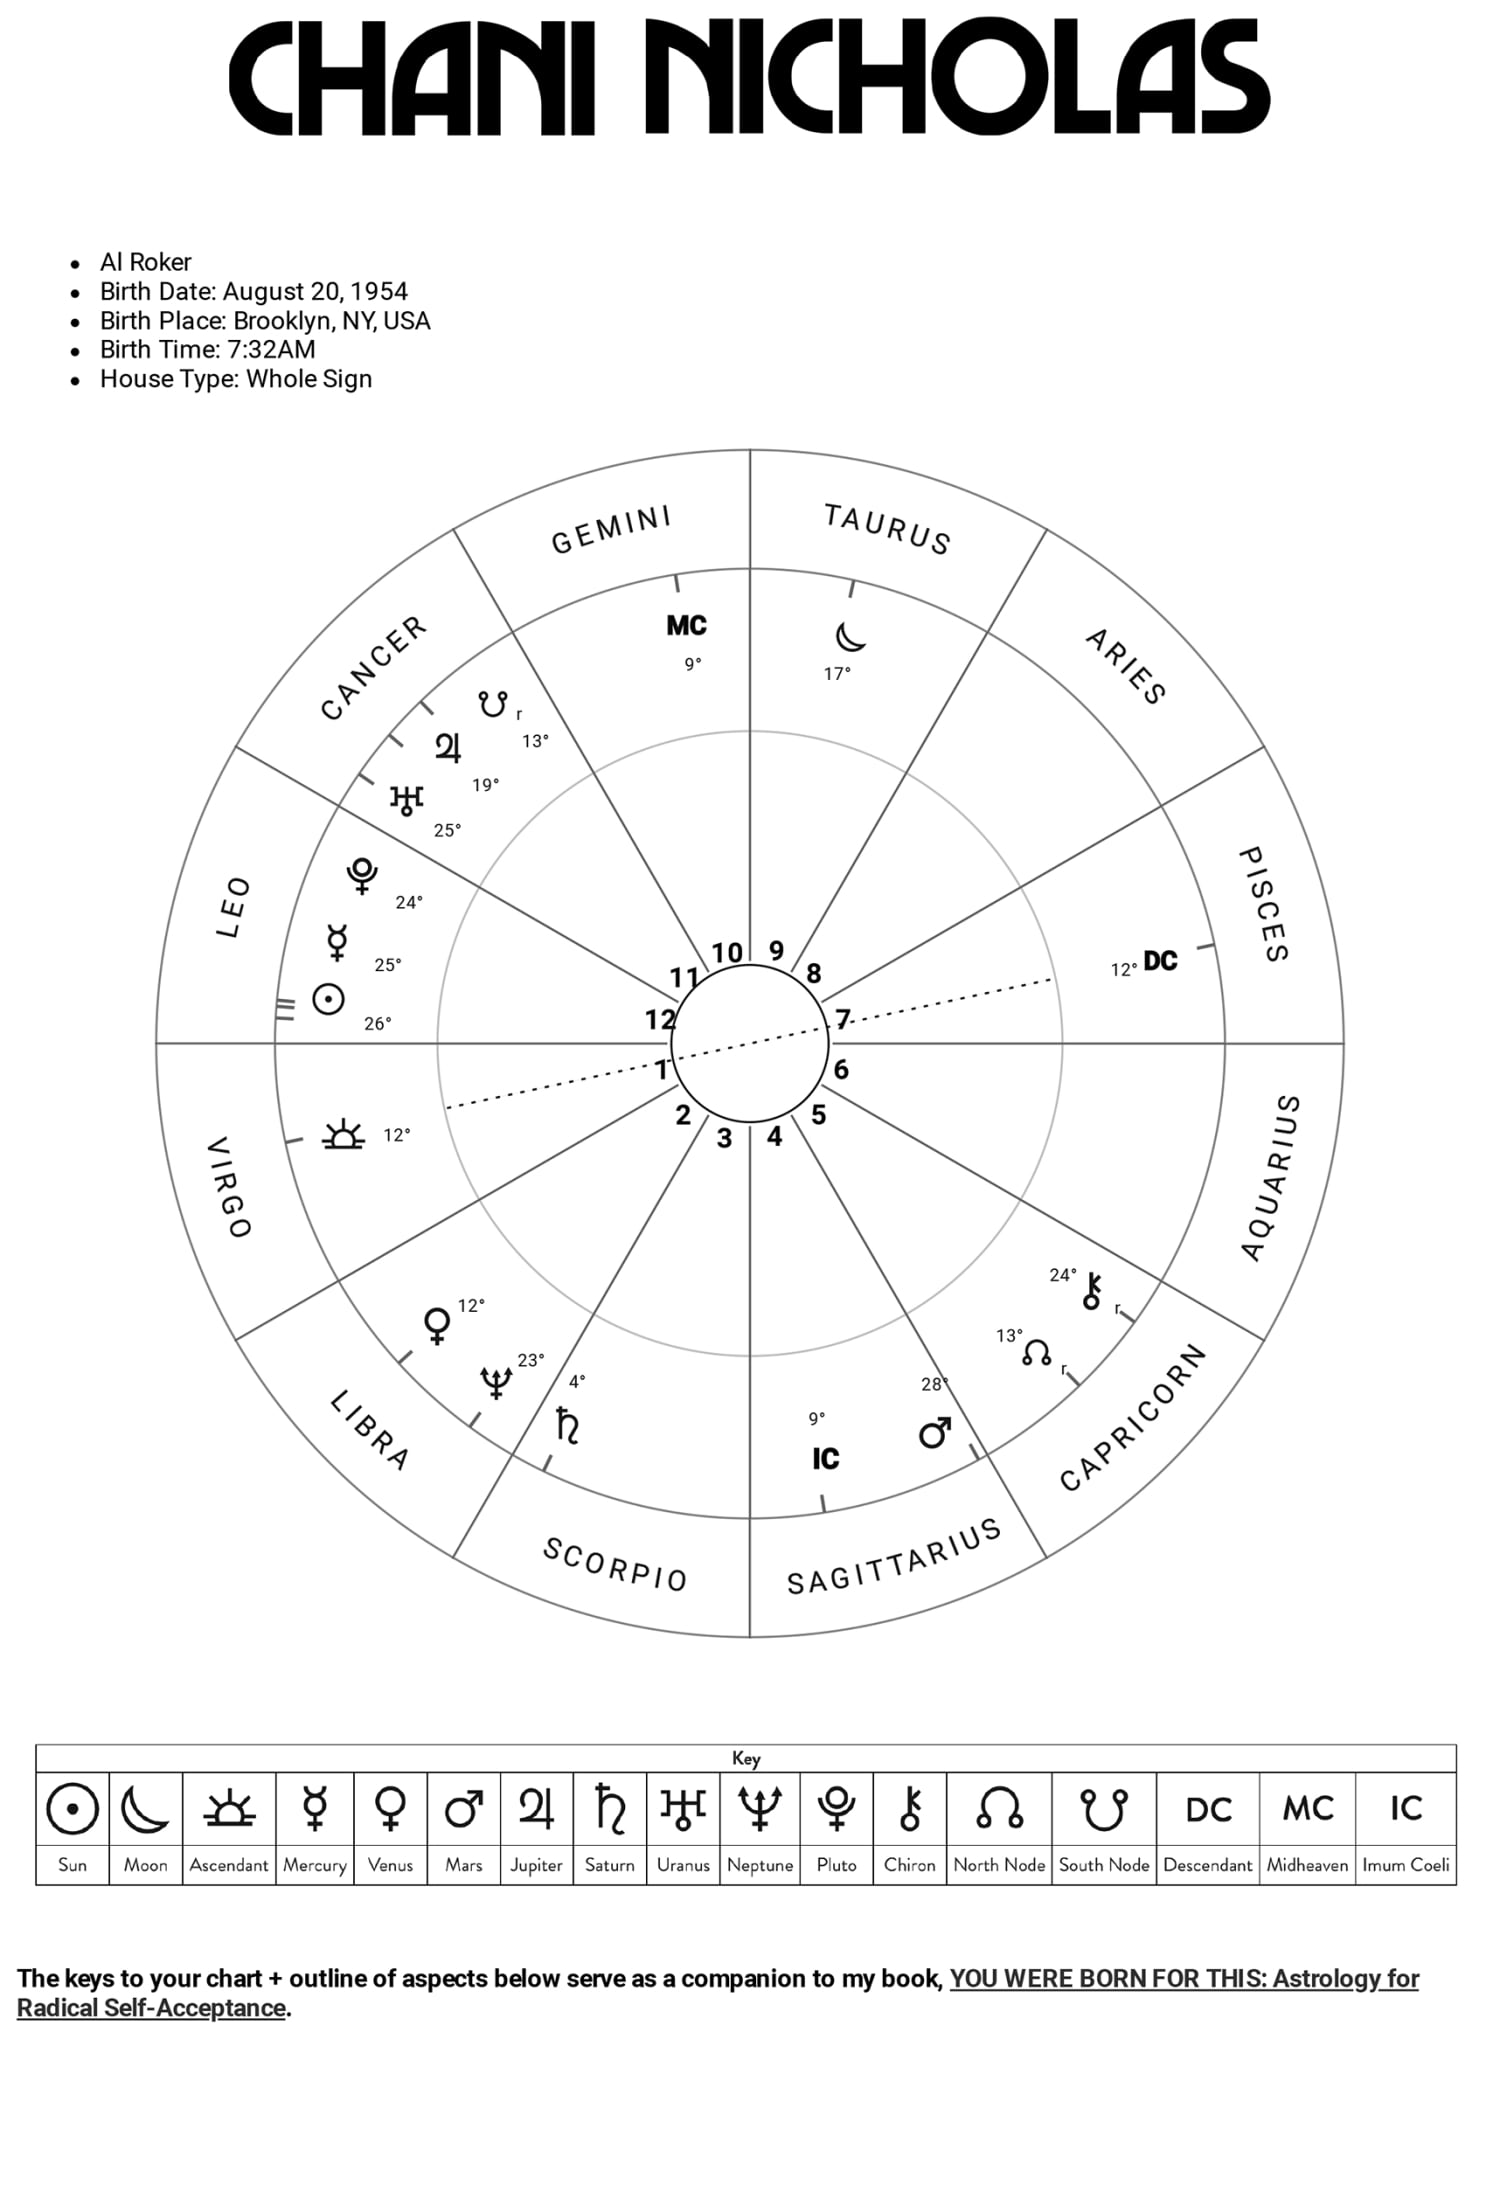 Al Roker's Birth Chart, Interpreted By Astrologer Chani Nicholas